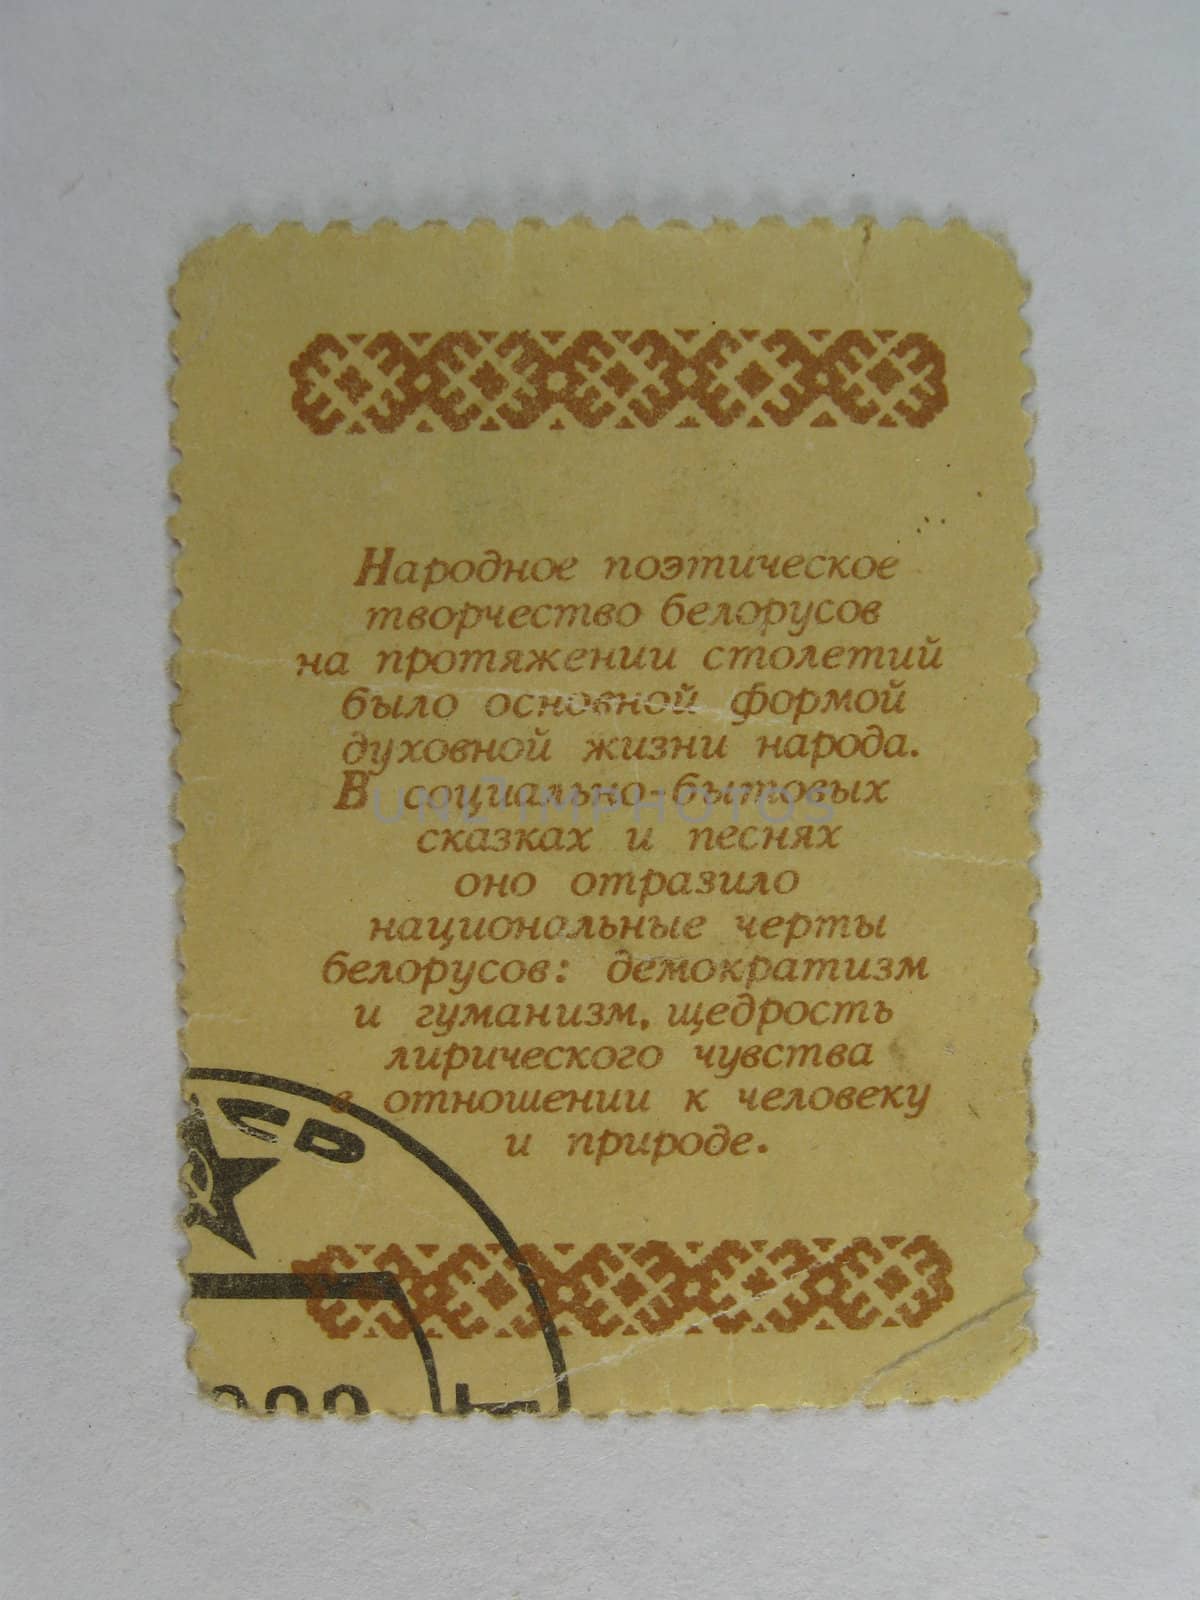 Stamp by dmitrubars